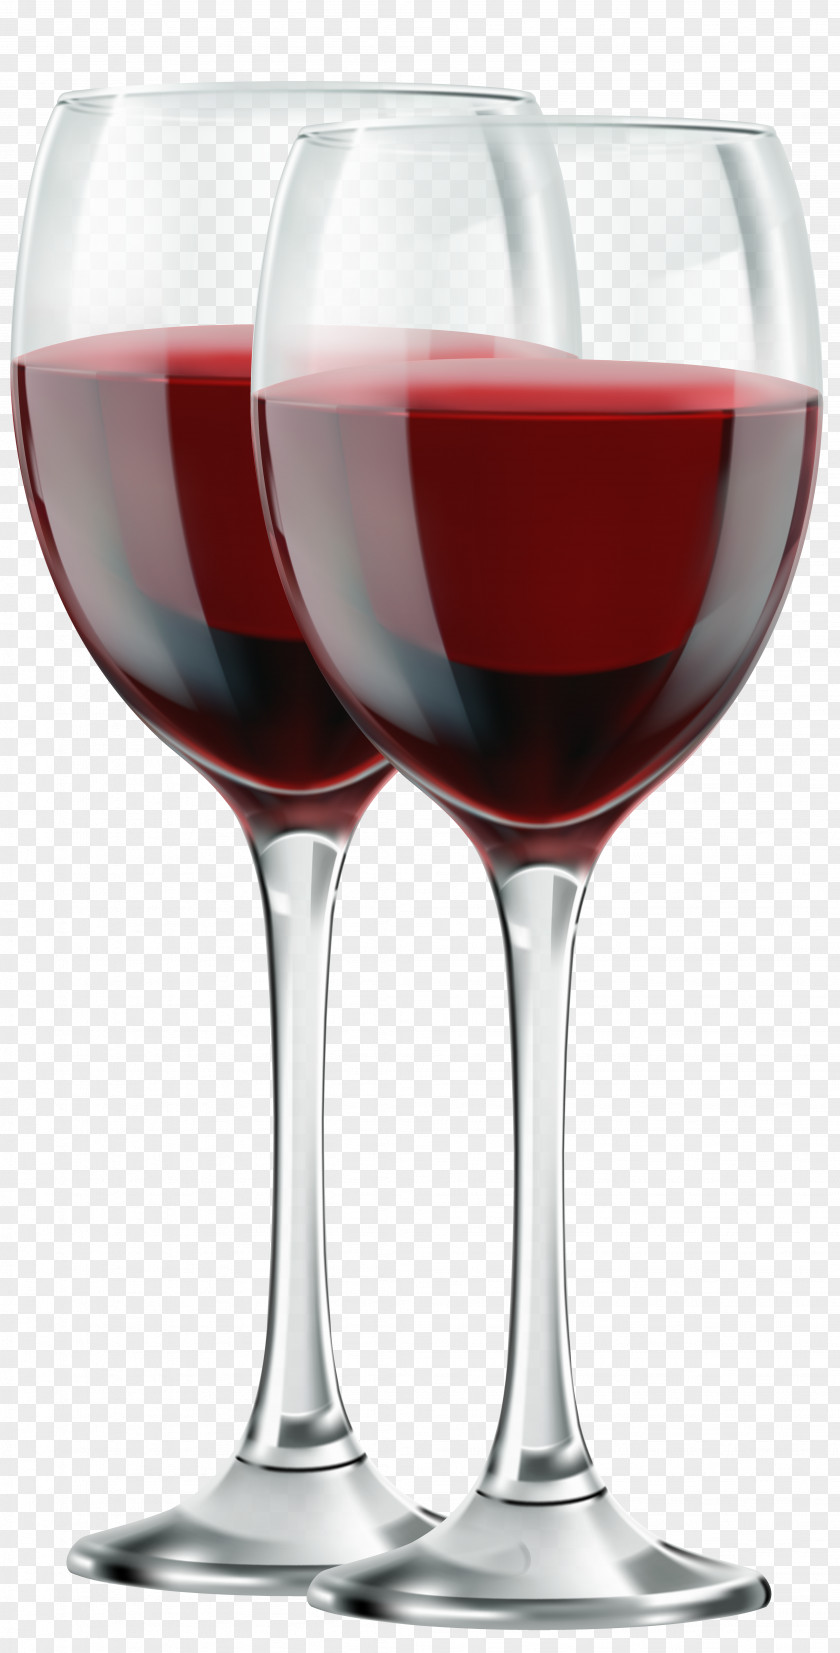 Two Glasses Of Red Wine Clip Art Image Cabernet Sauvignon Champagne PNG